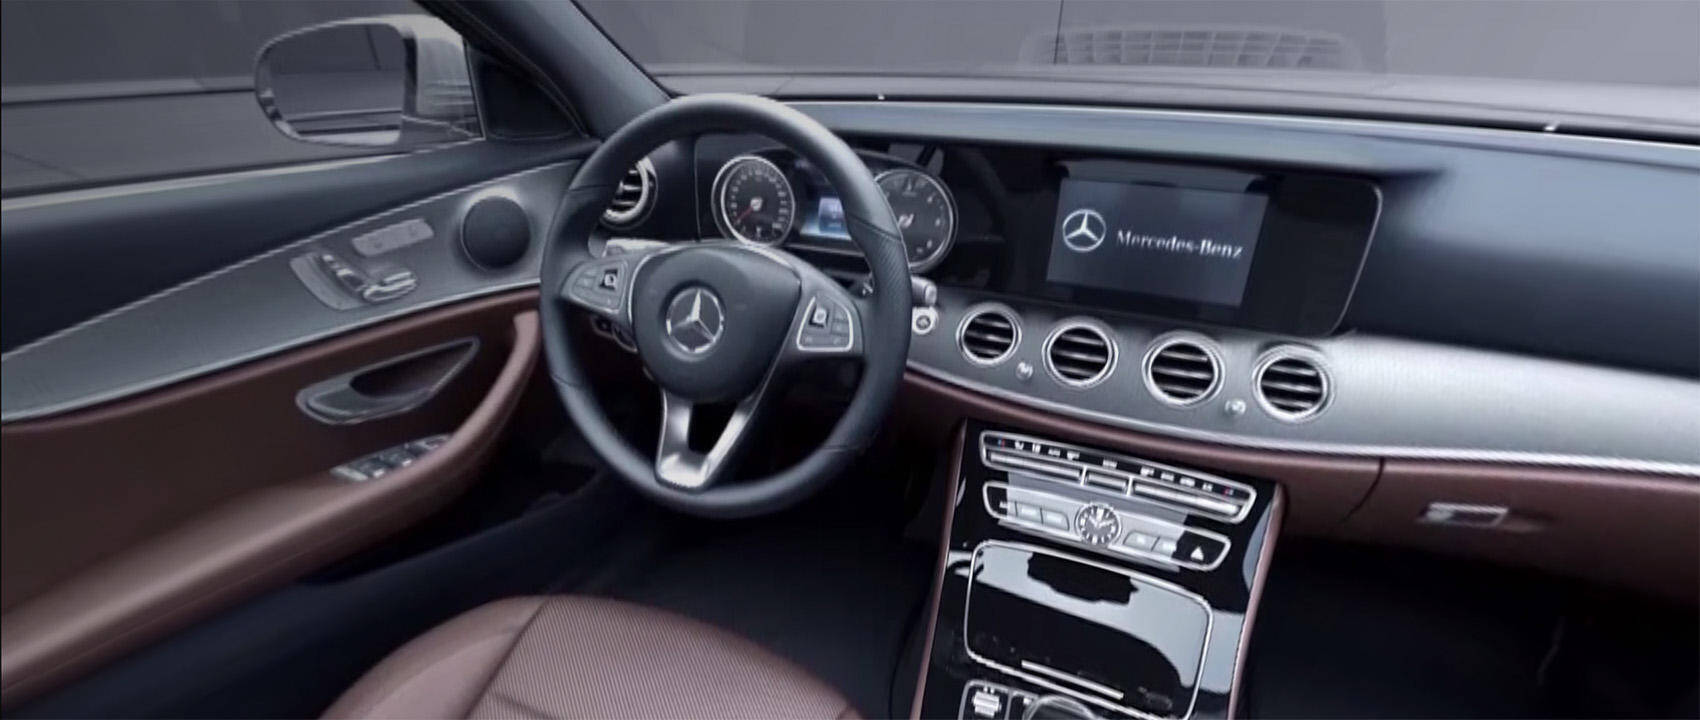 Mercedes-Benz: Ανακαλεί περισσότερα από ένα εκατ. αυτοκίνητα παγκοσμίως